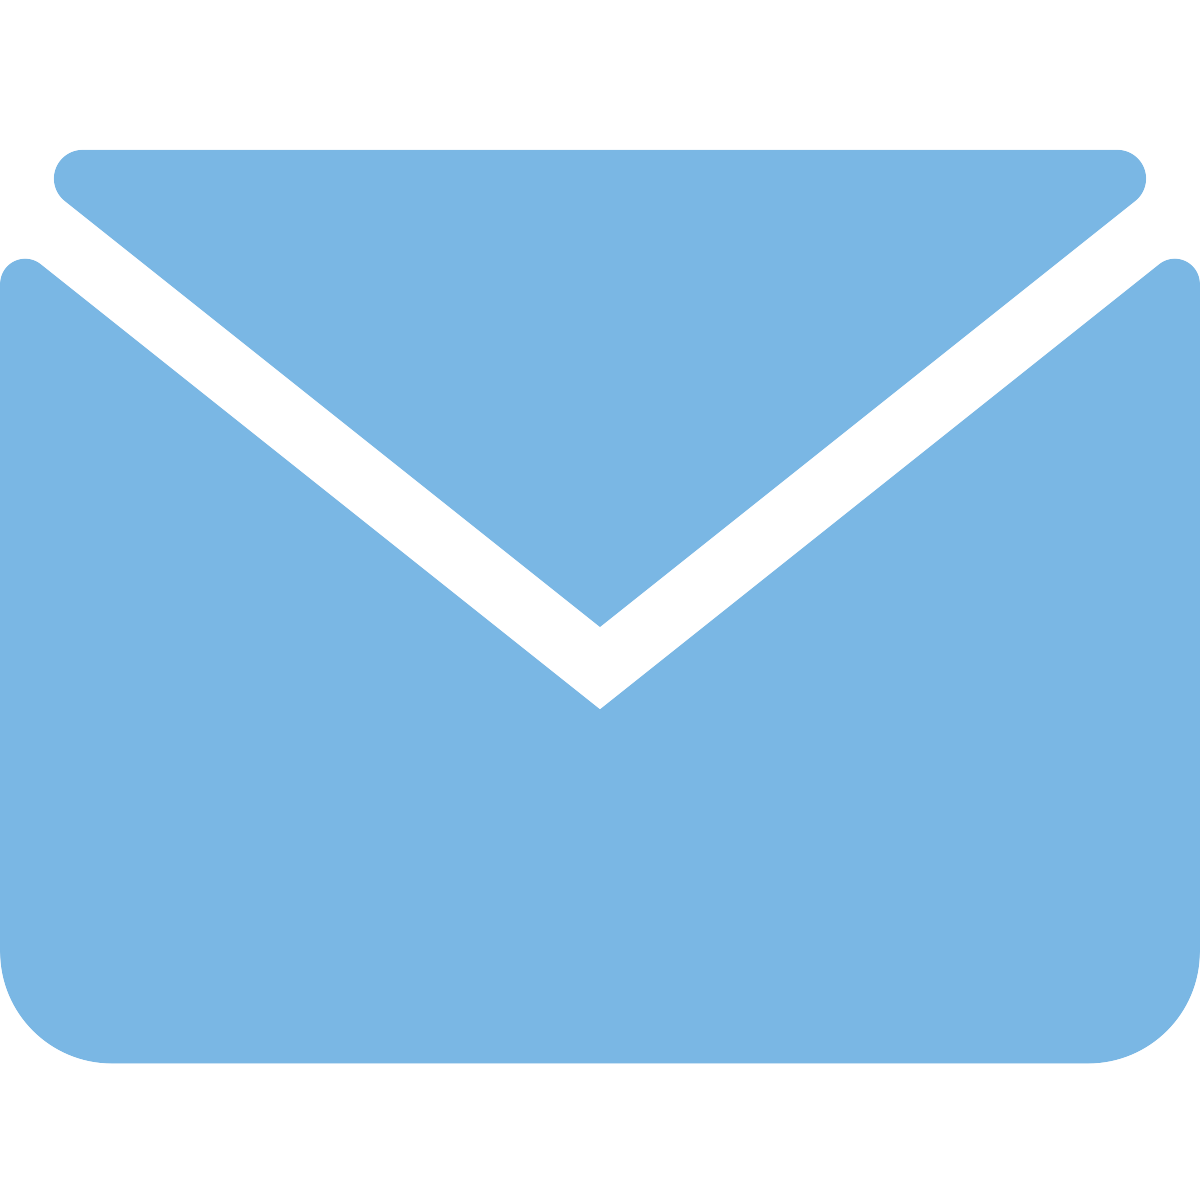 Email resume symbol.